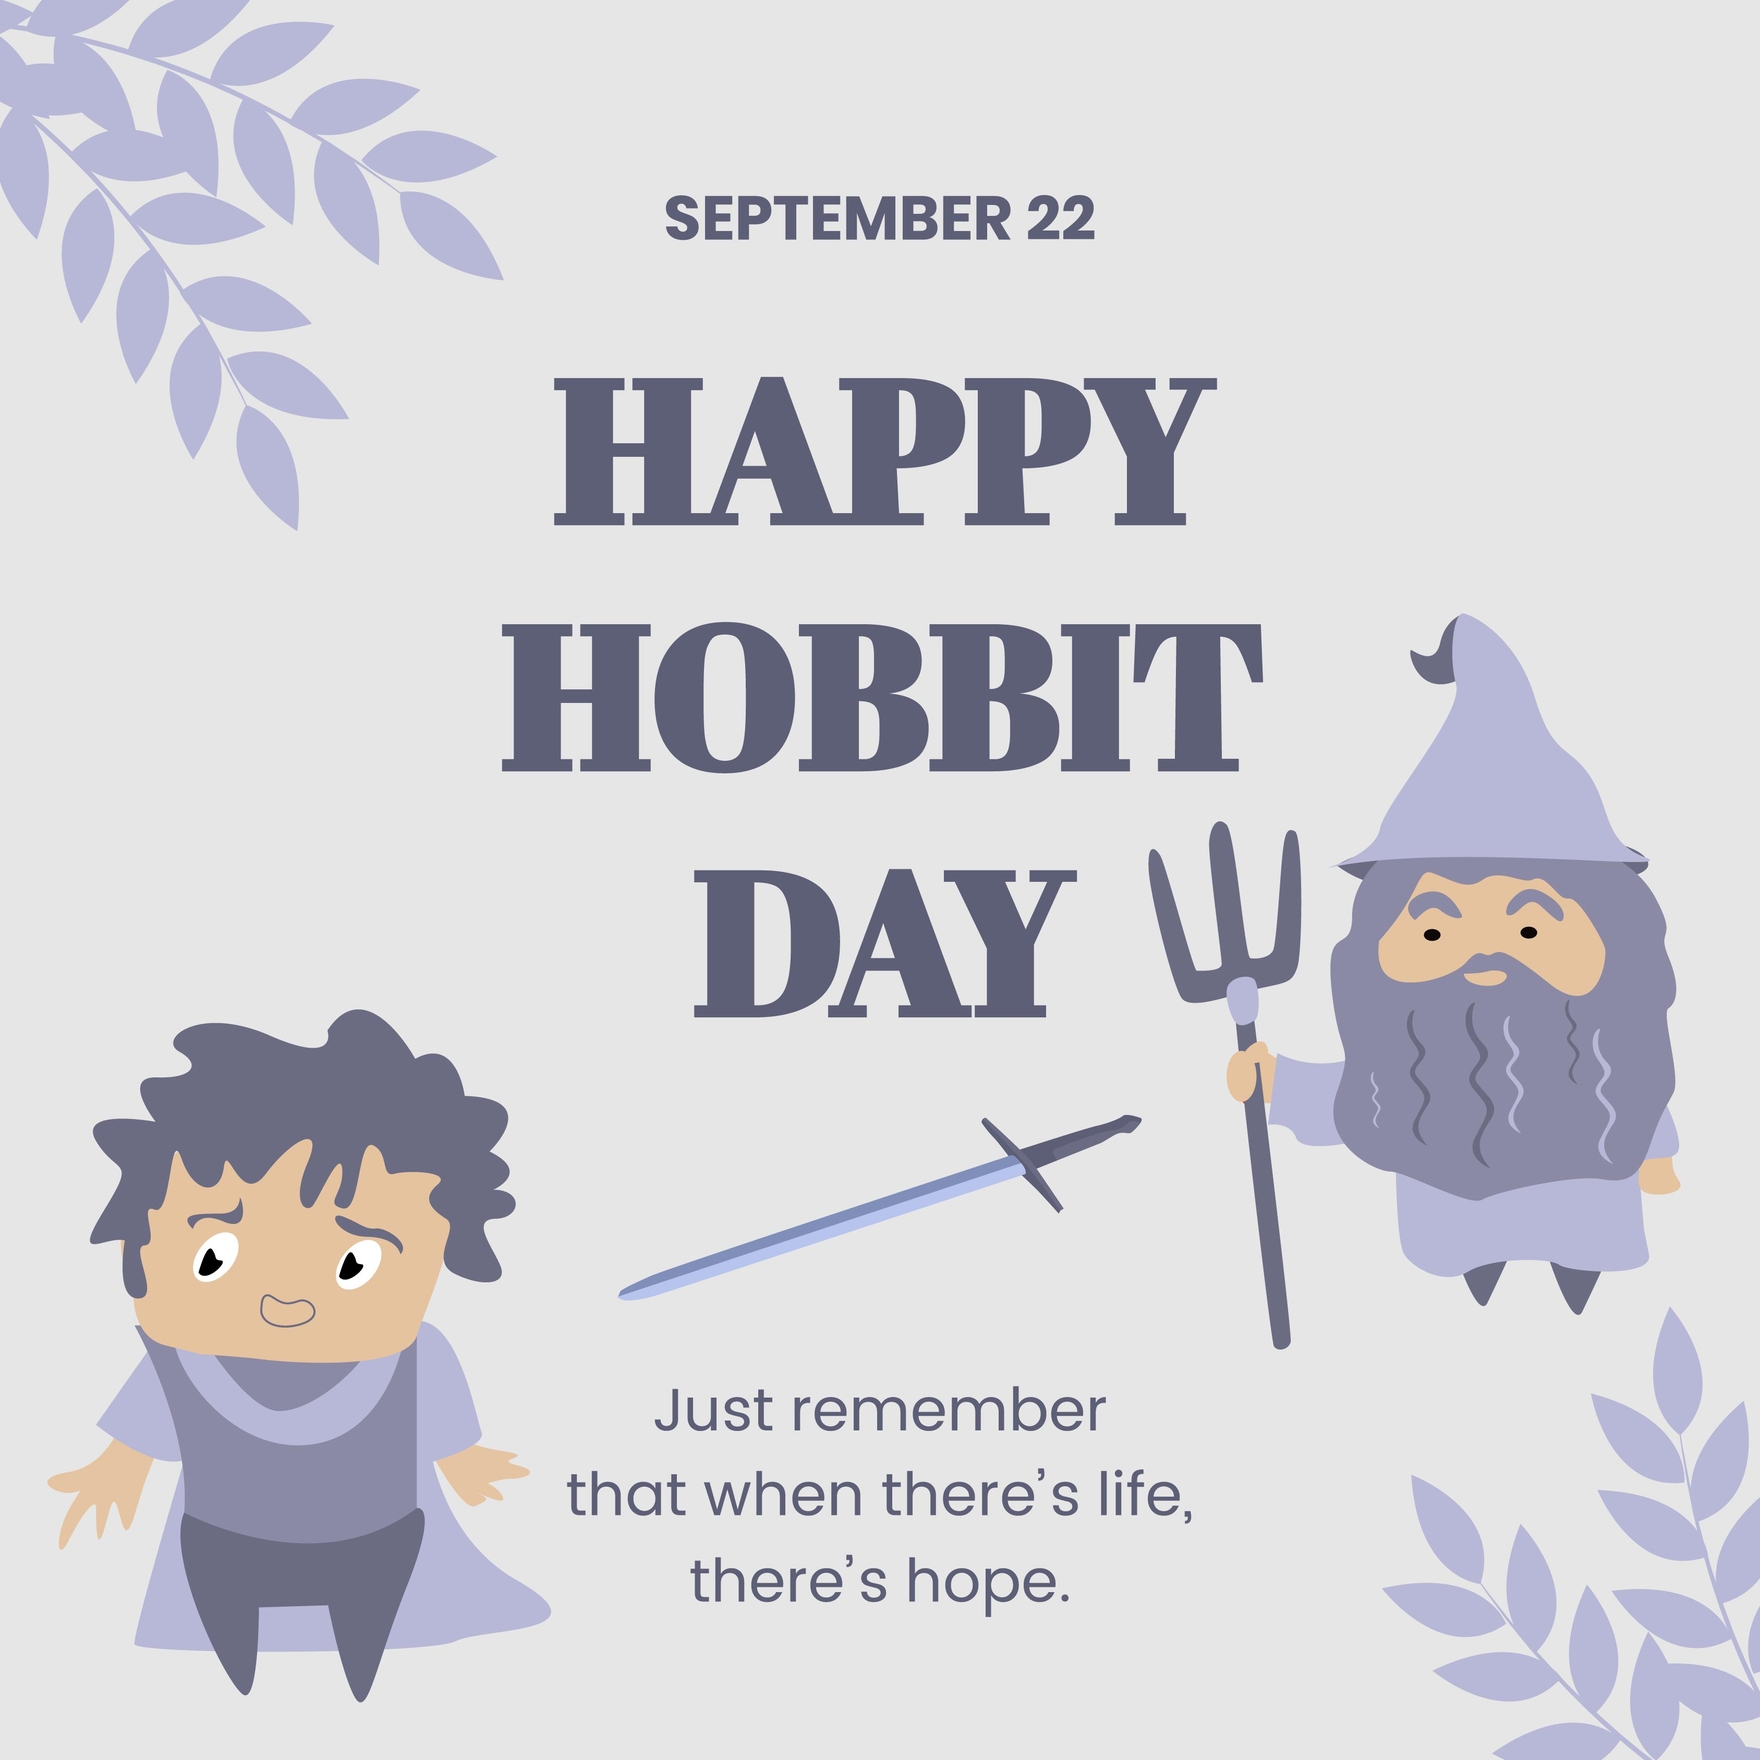 Hobbit Day FB Post in Illustrator, PSD, EPS, SVG, JPG, PNG